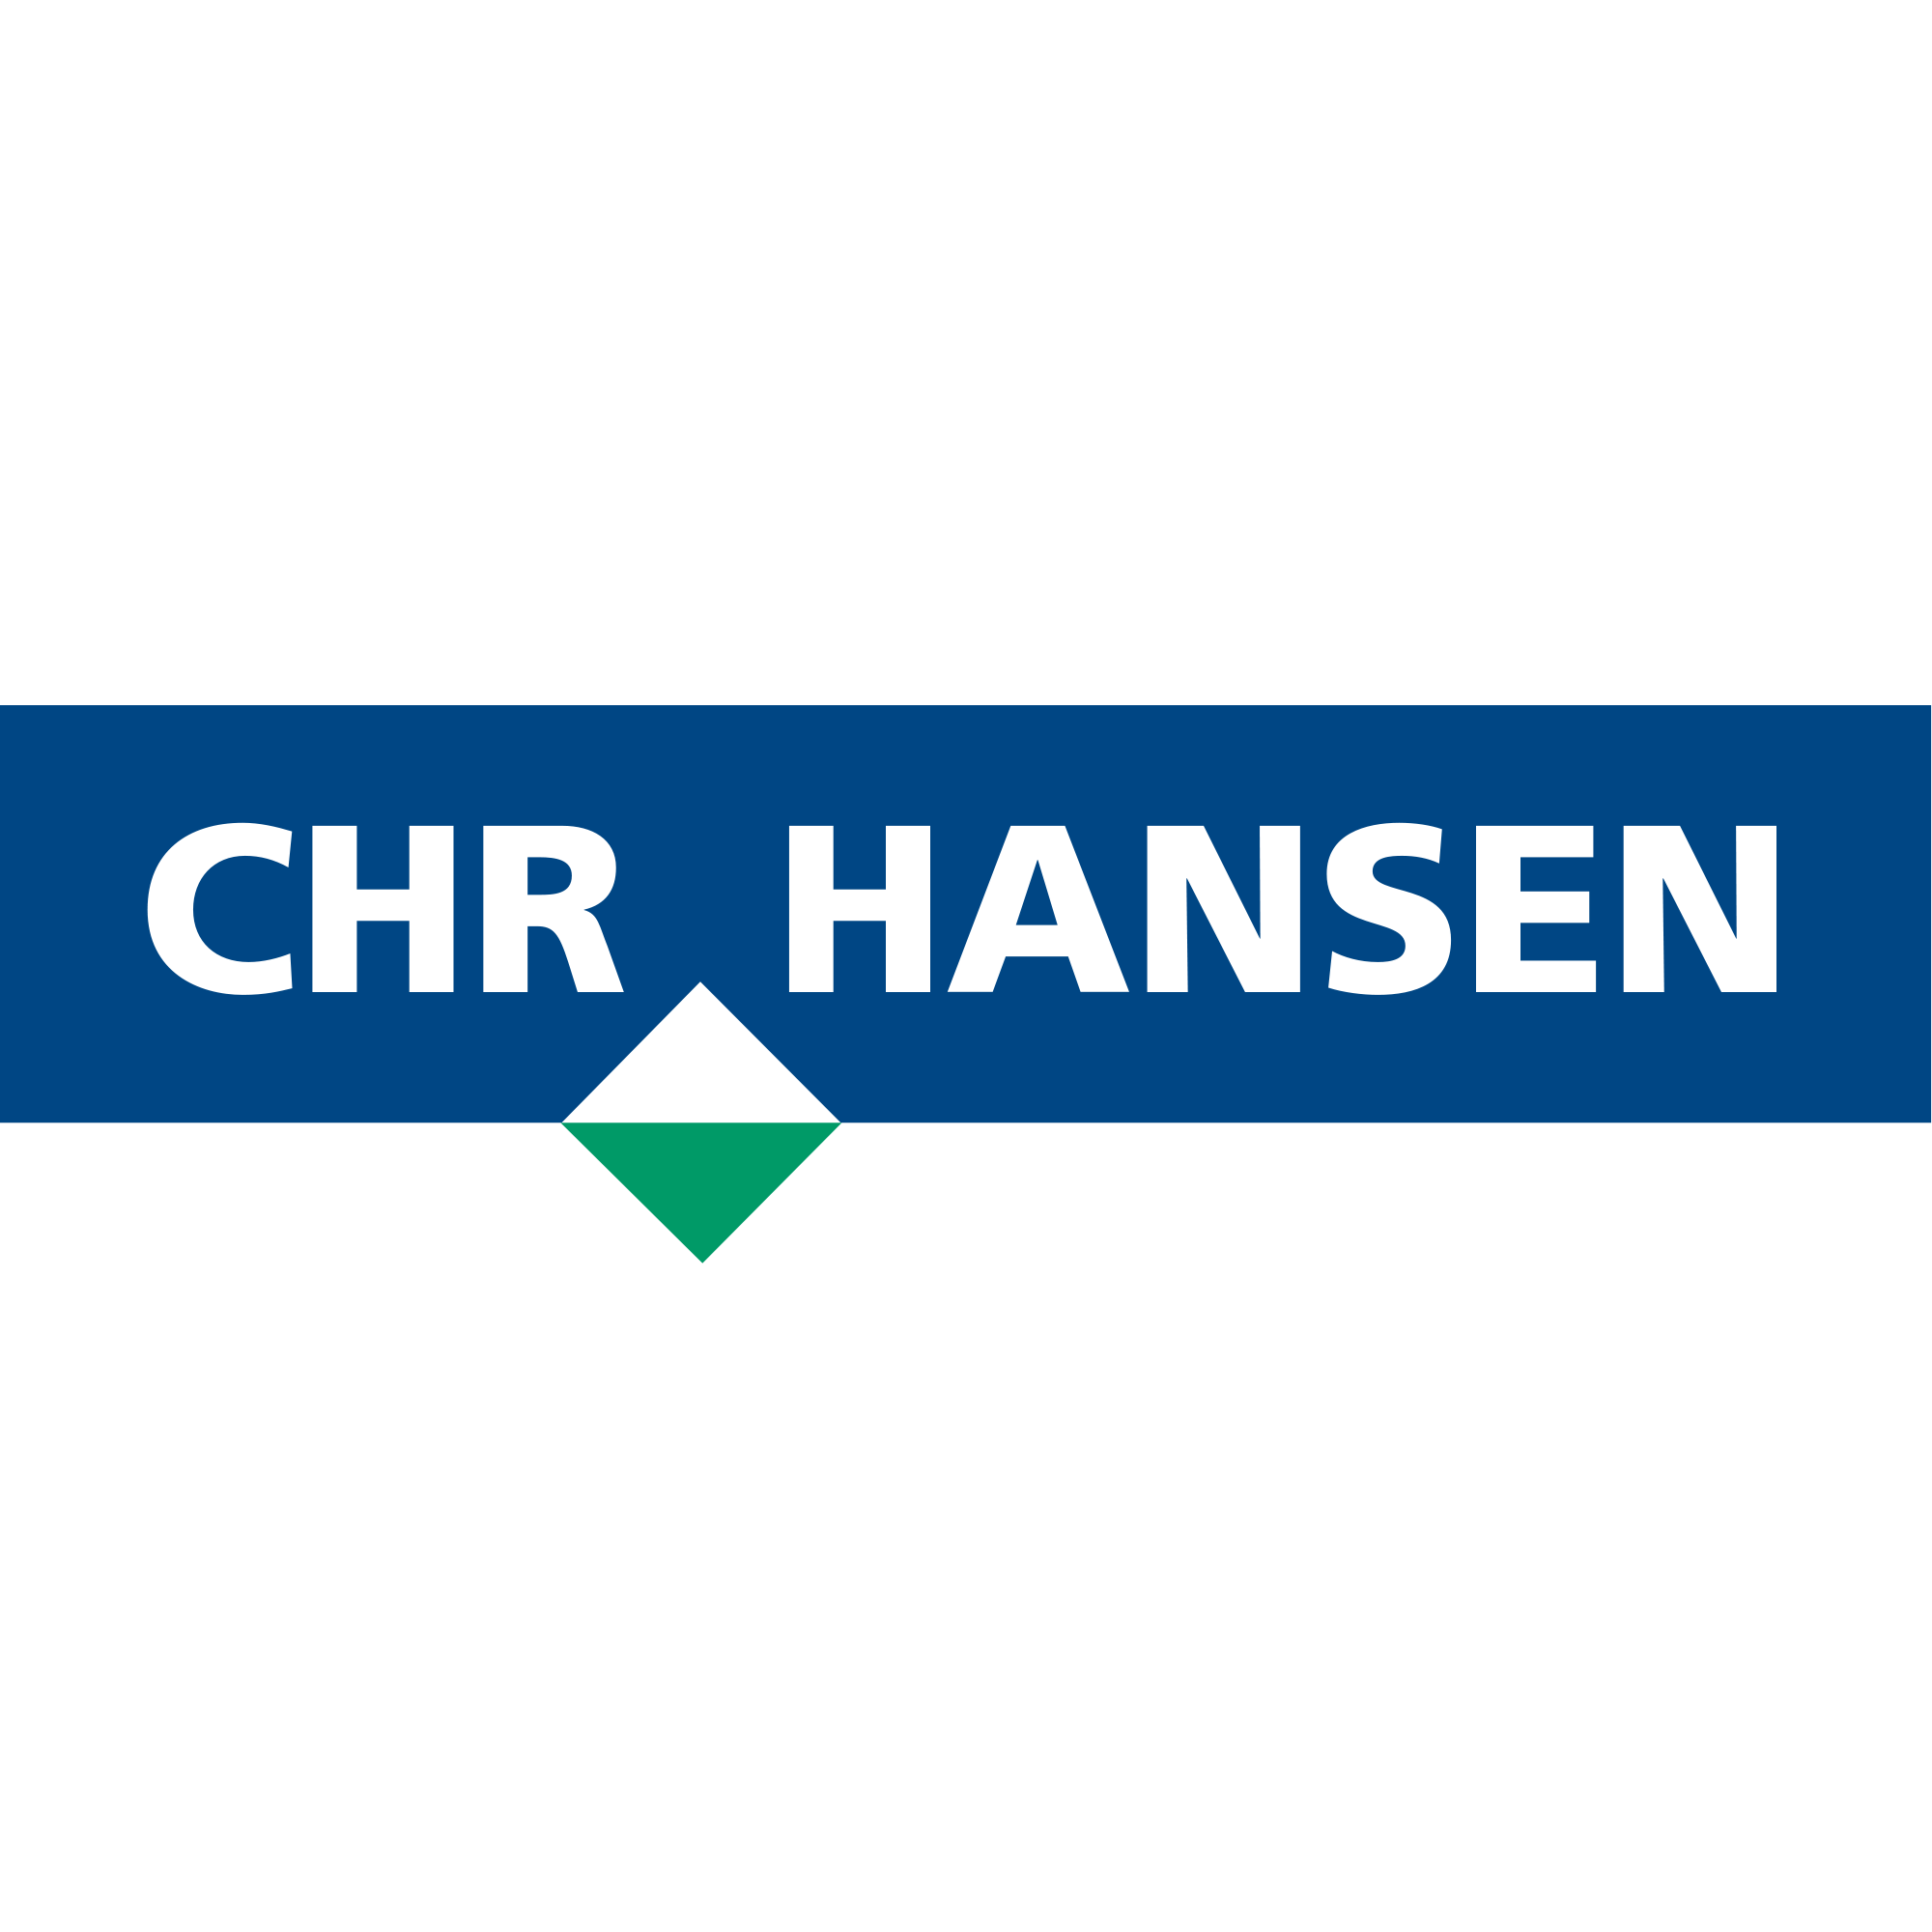 char hansen logo